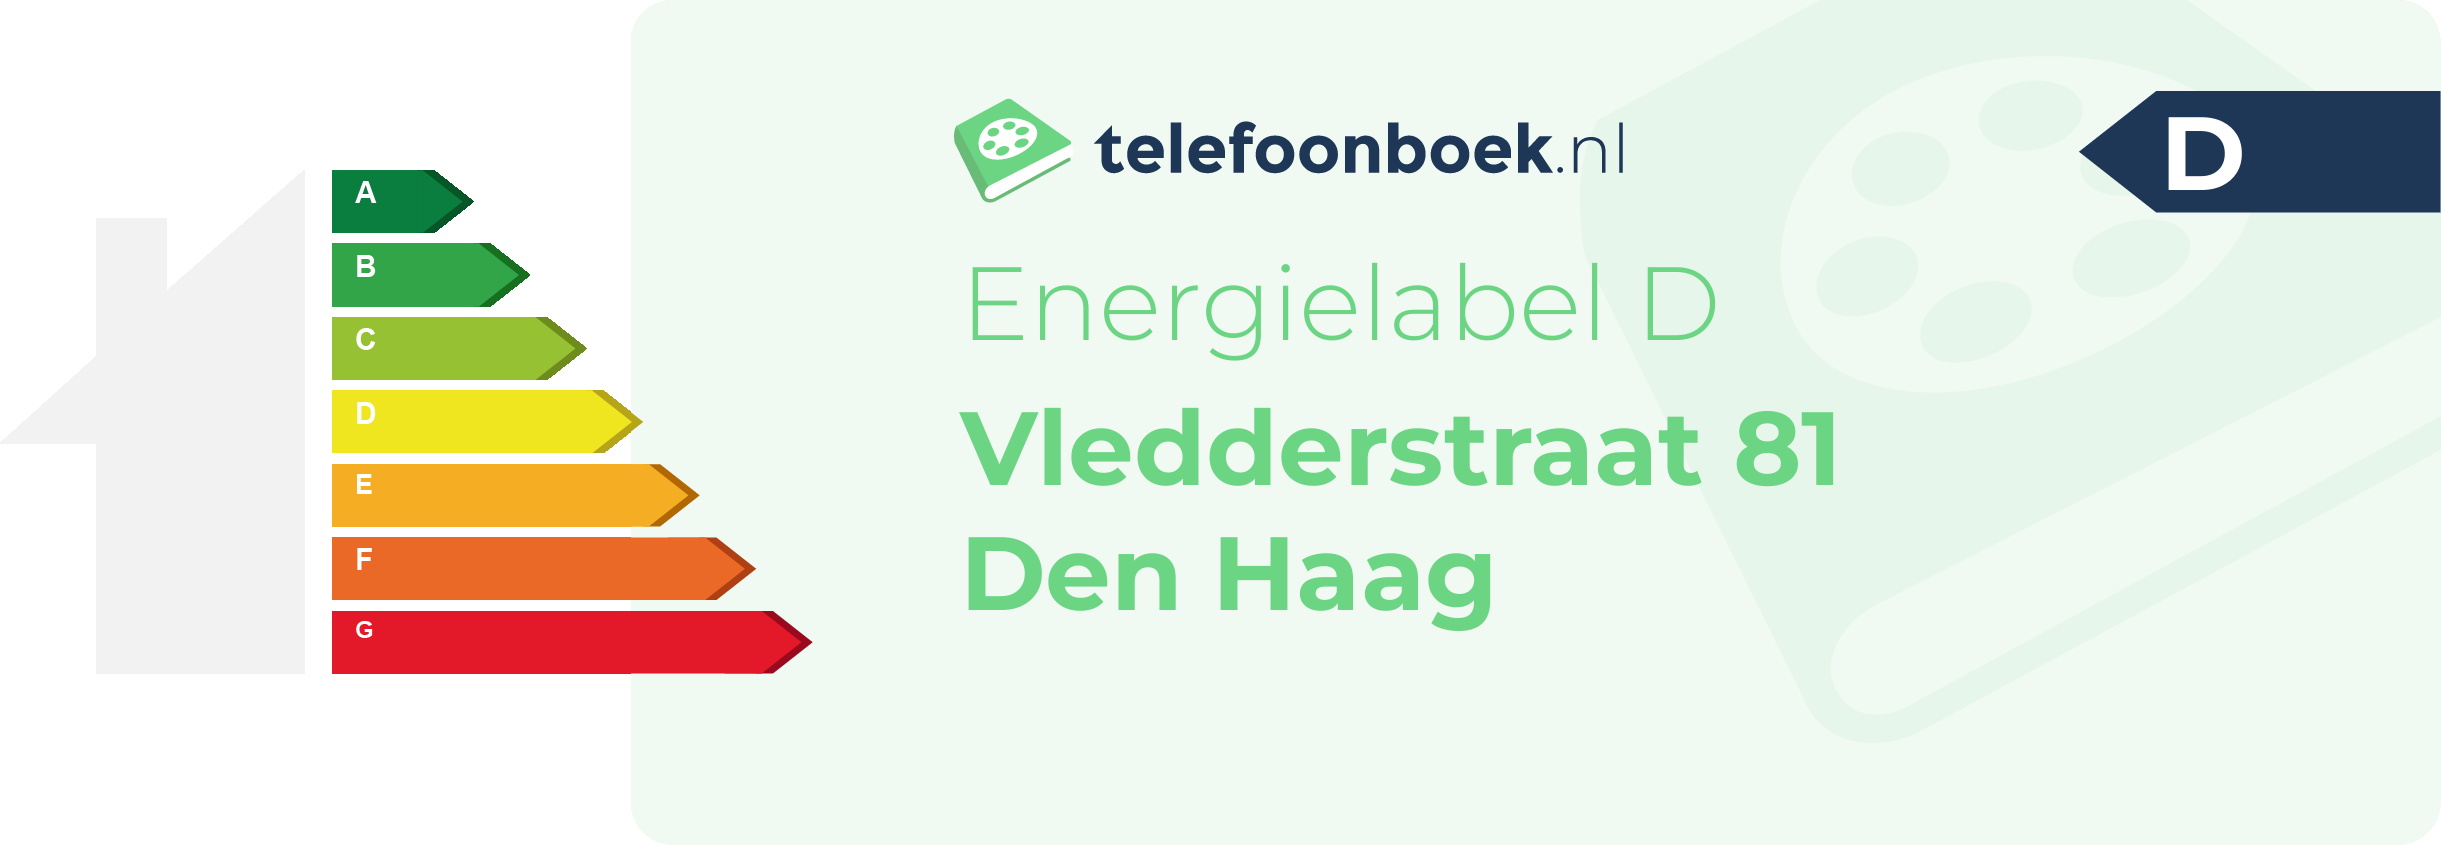 Energielabel Vledderstraat 81 Den Haag